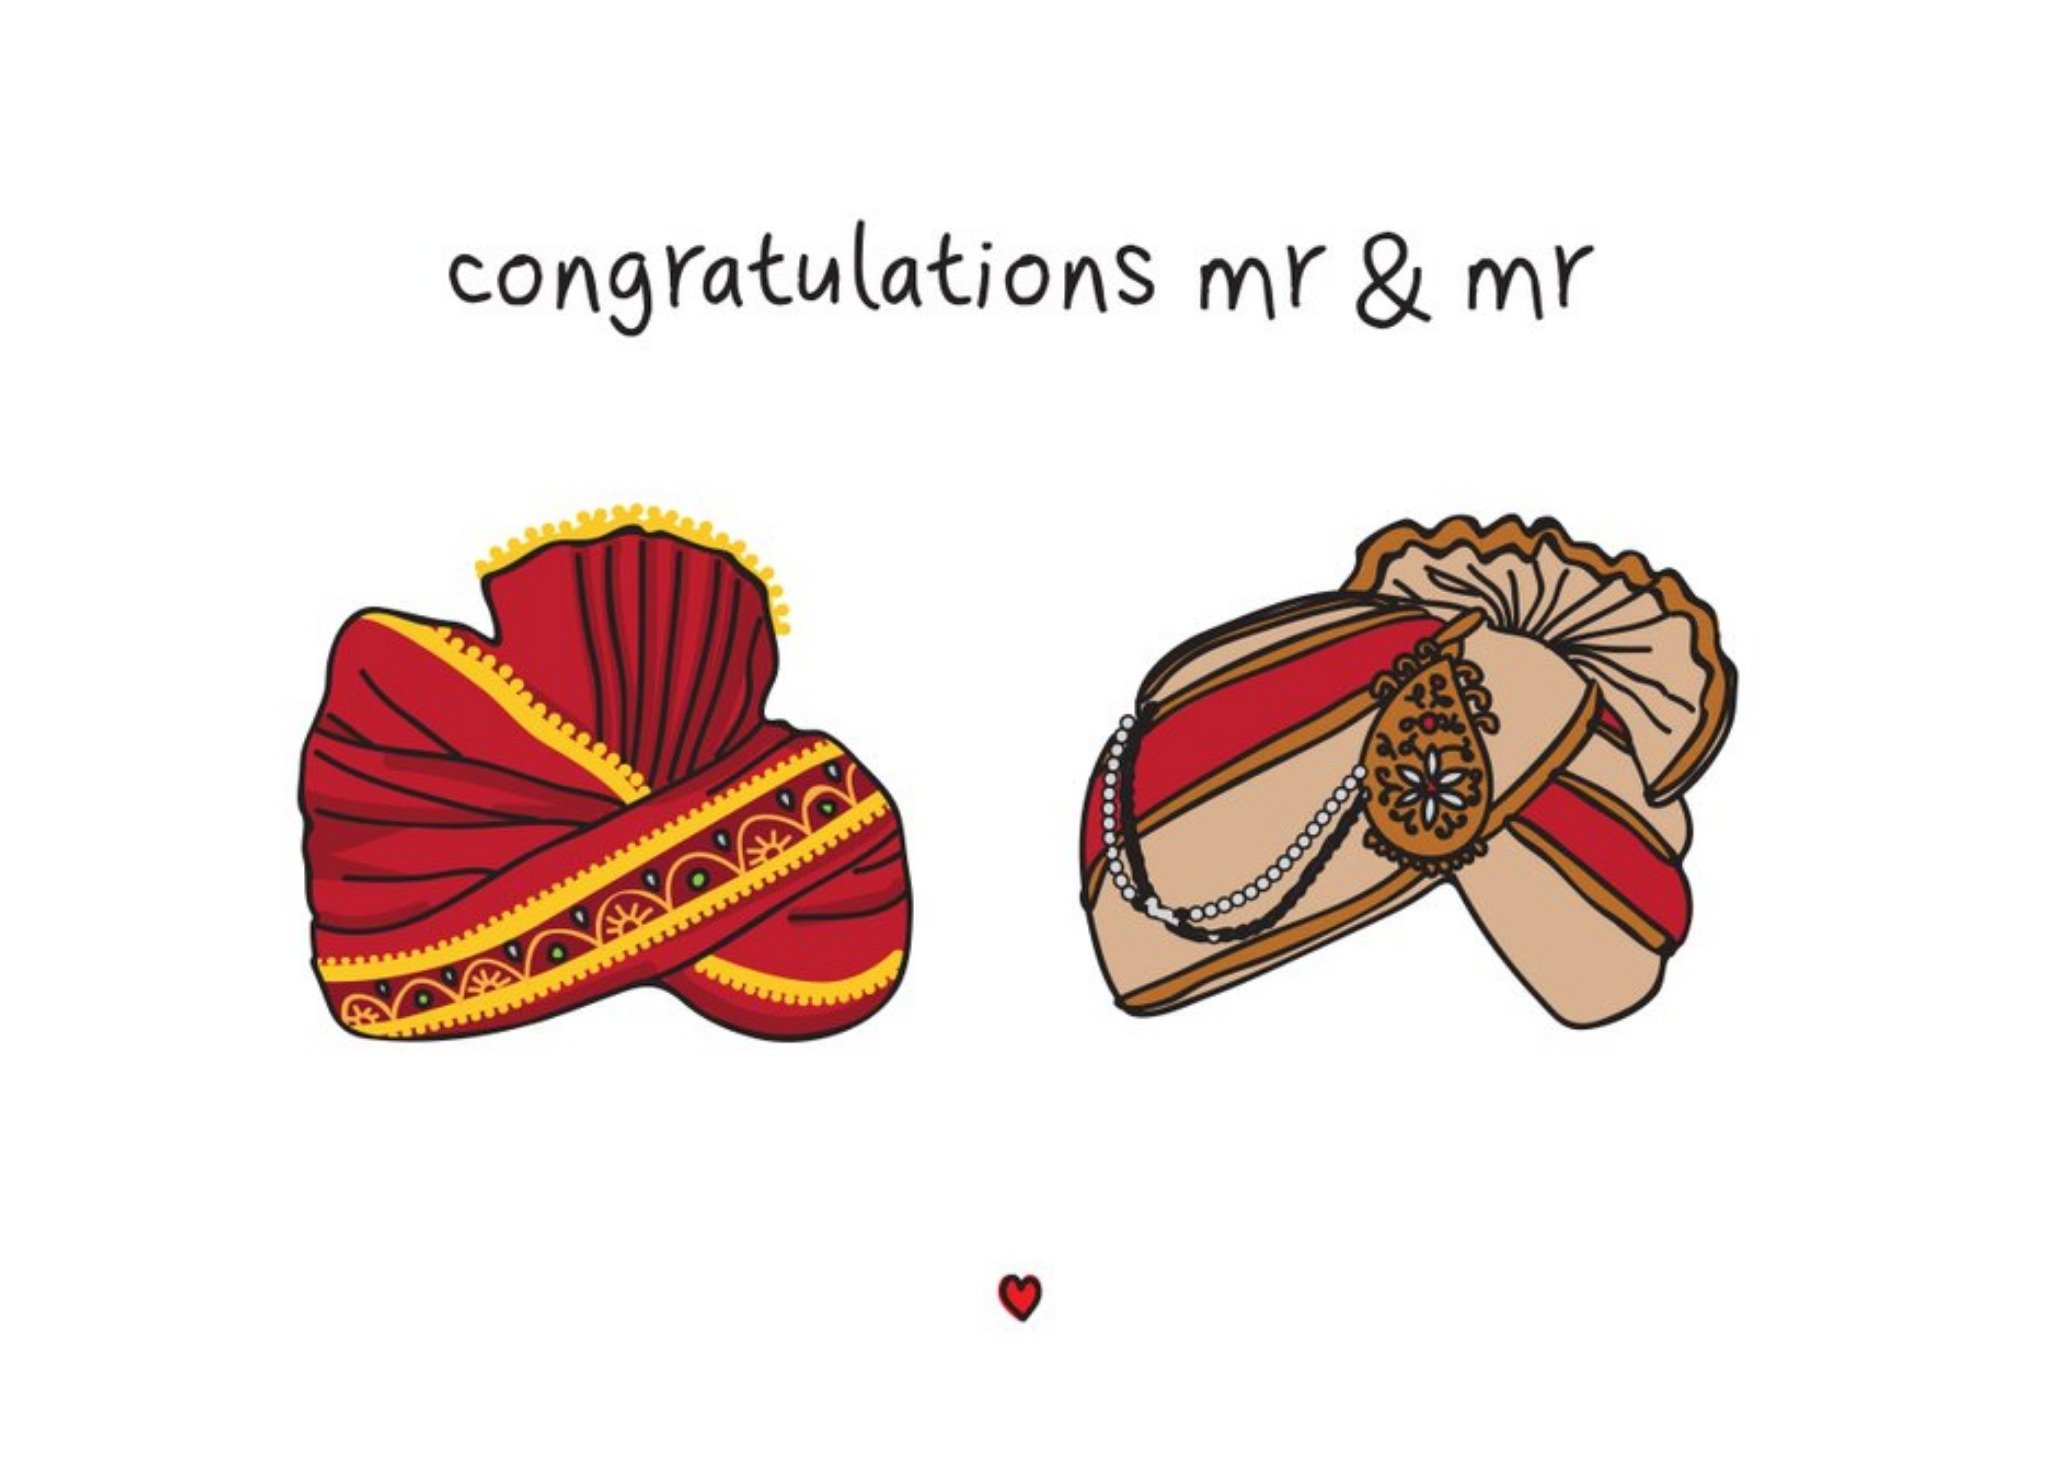 Moonpig The Playful Indian Congratulations Mr & Mr LGBTQ+ Wedding Card, Large